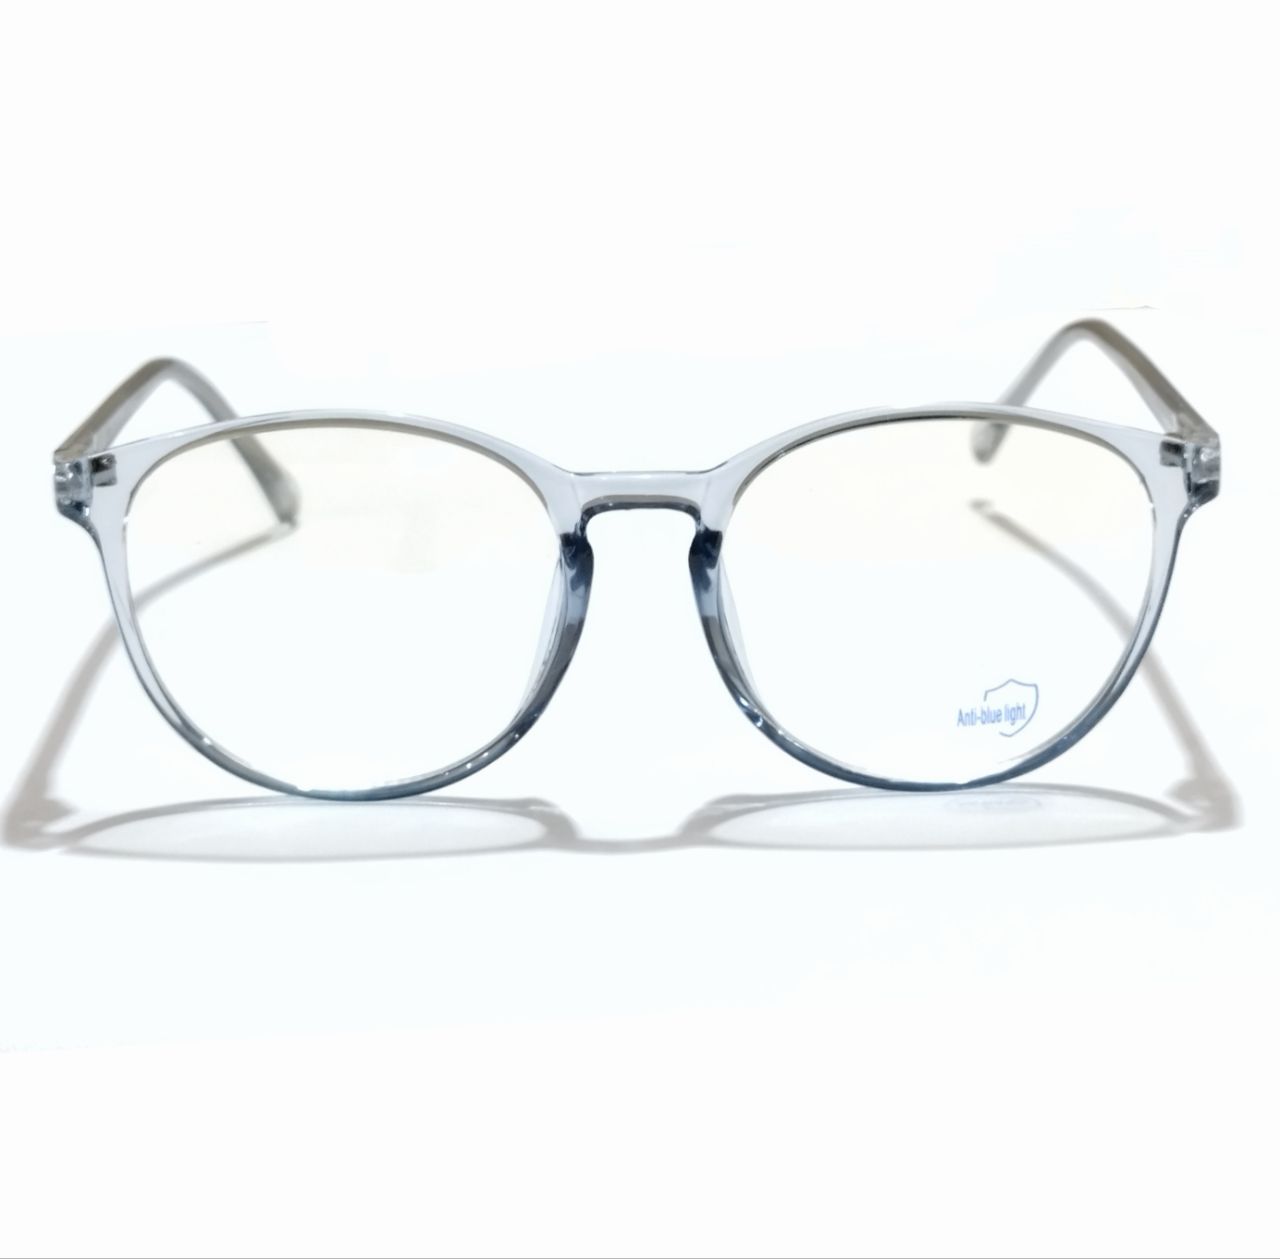 Transparent Blue Frame Round Glasses Computer Glasses foar Men and Women M8555 C7